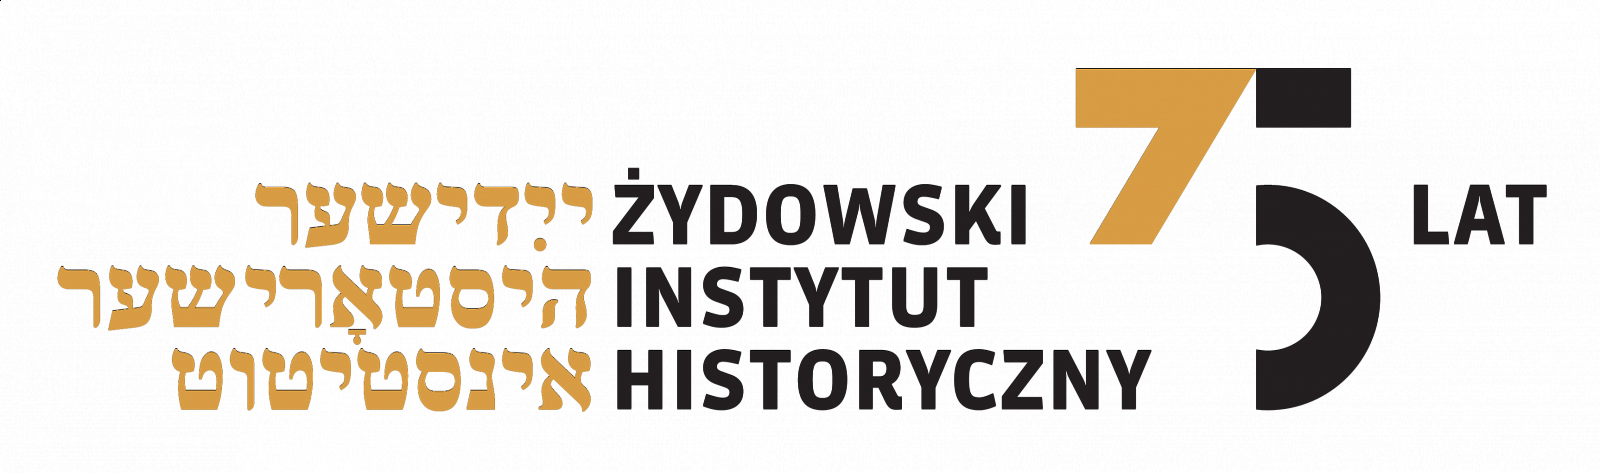 Logo_Wersja_Polska-01.png [107.65 KB]